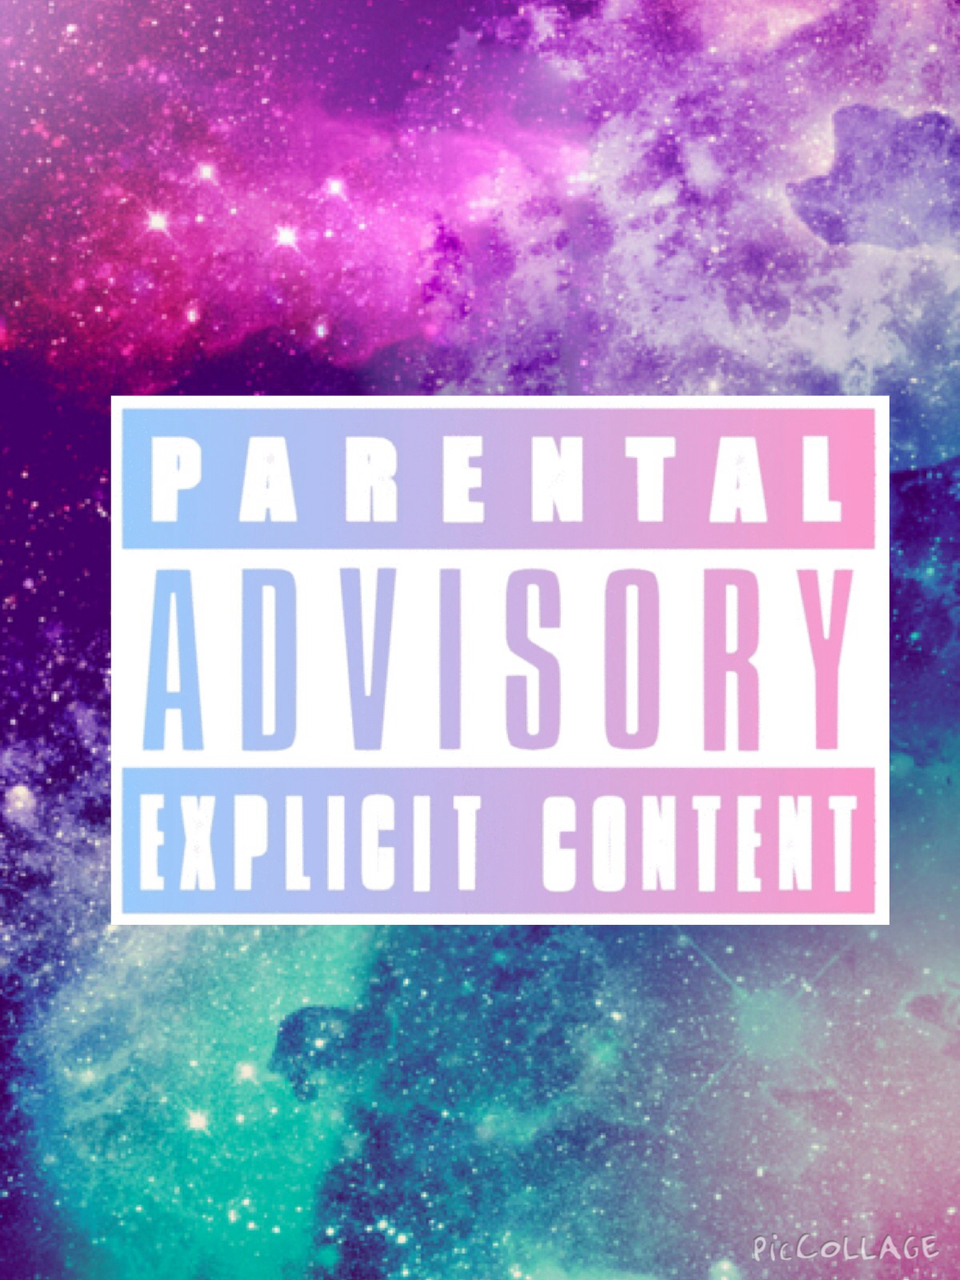 Parental advisory image